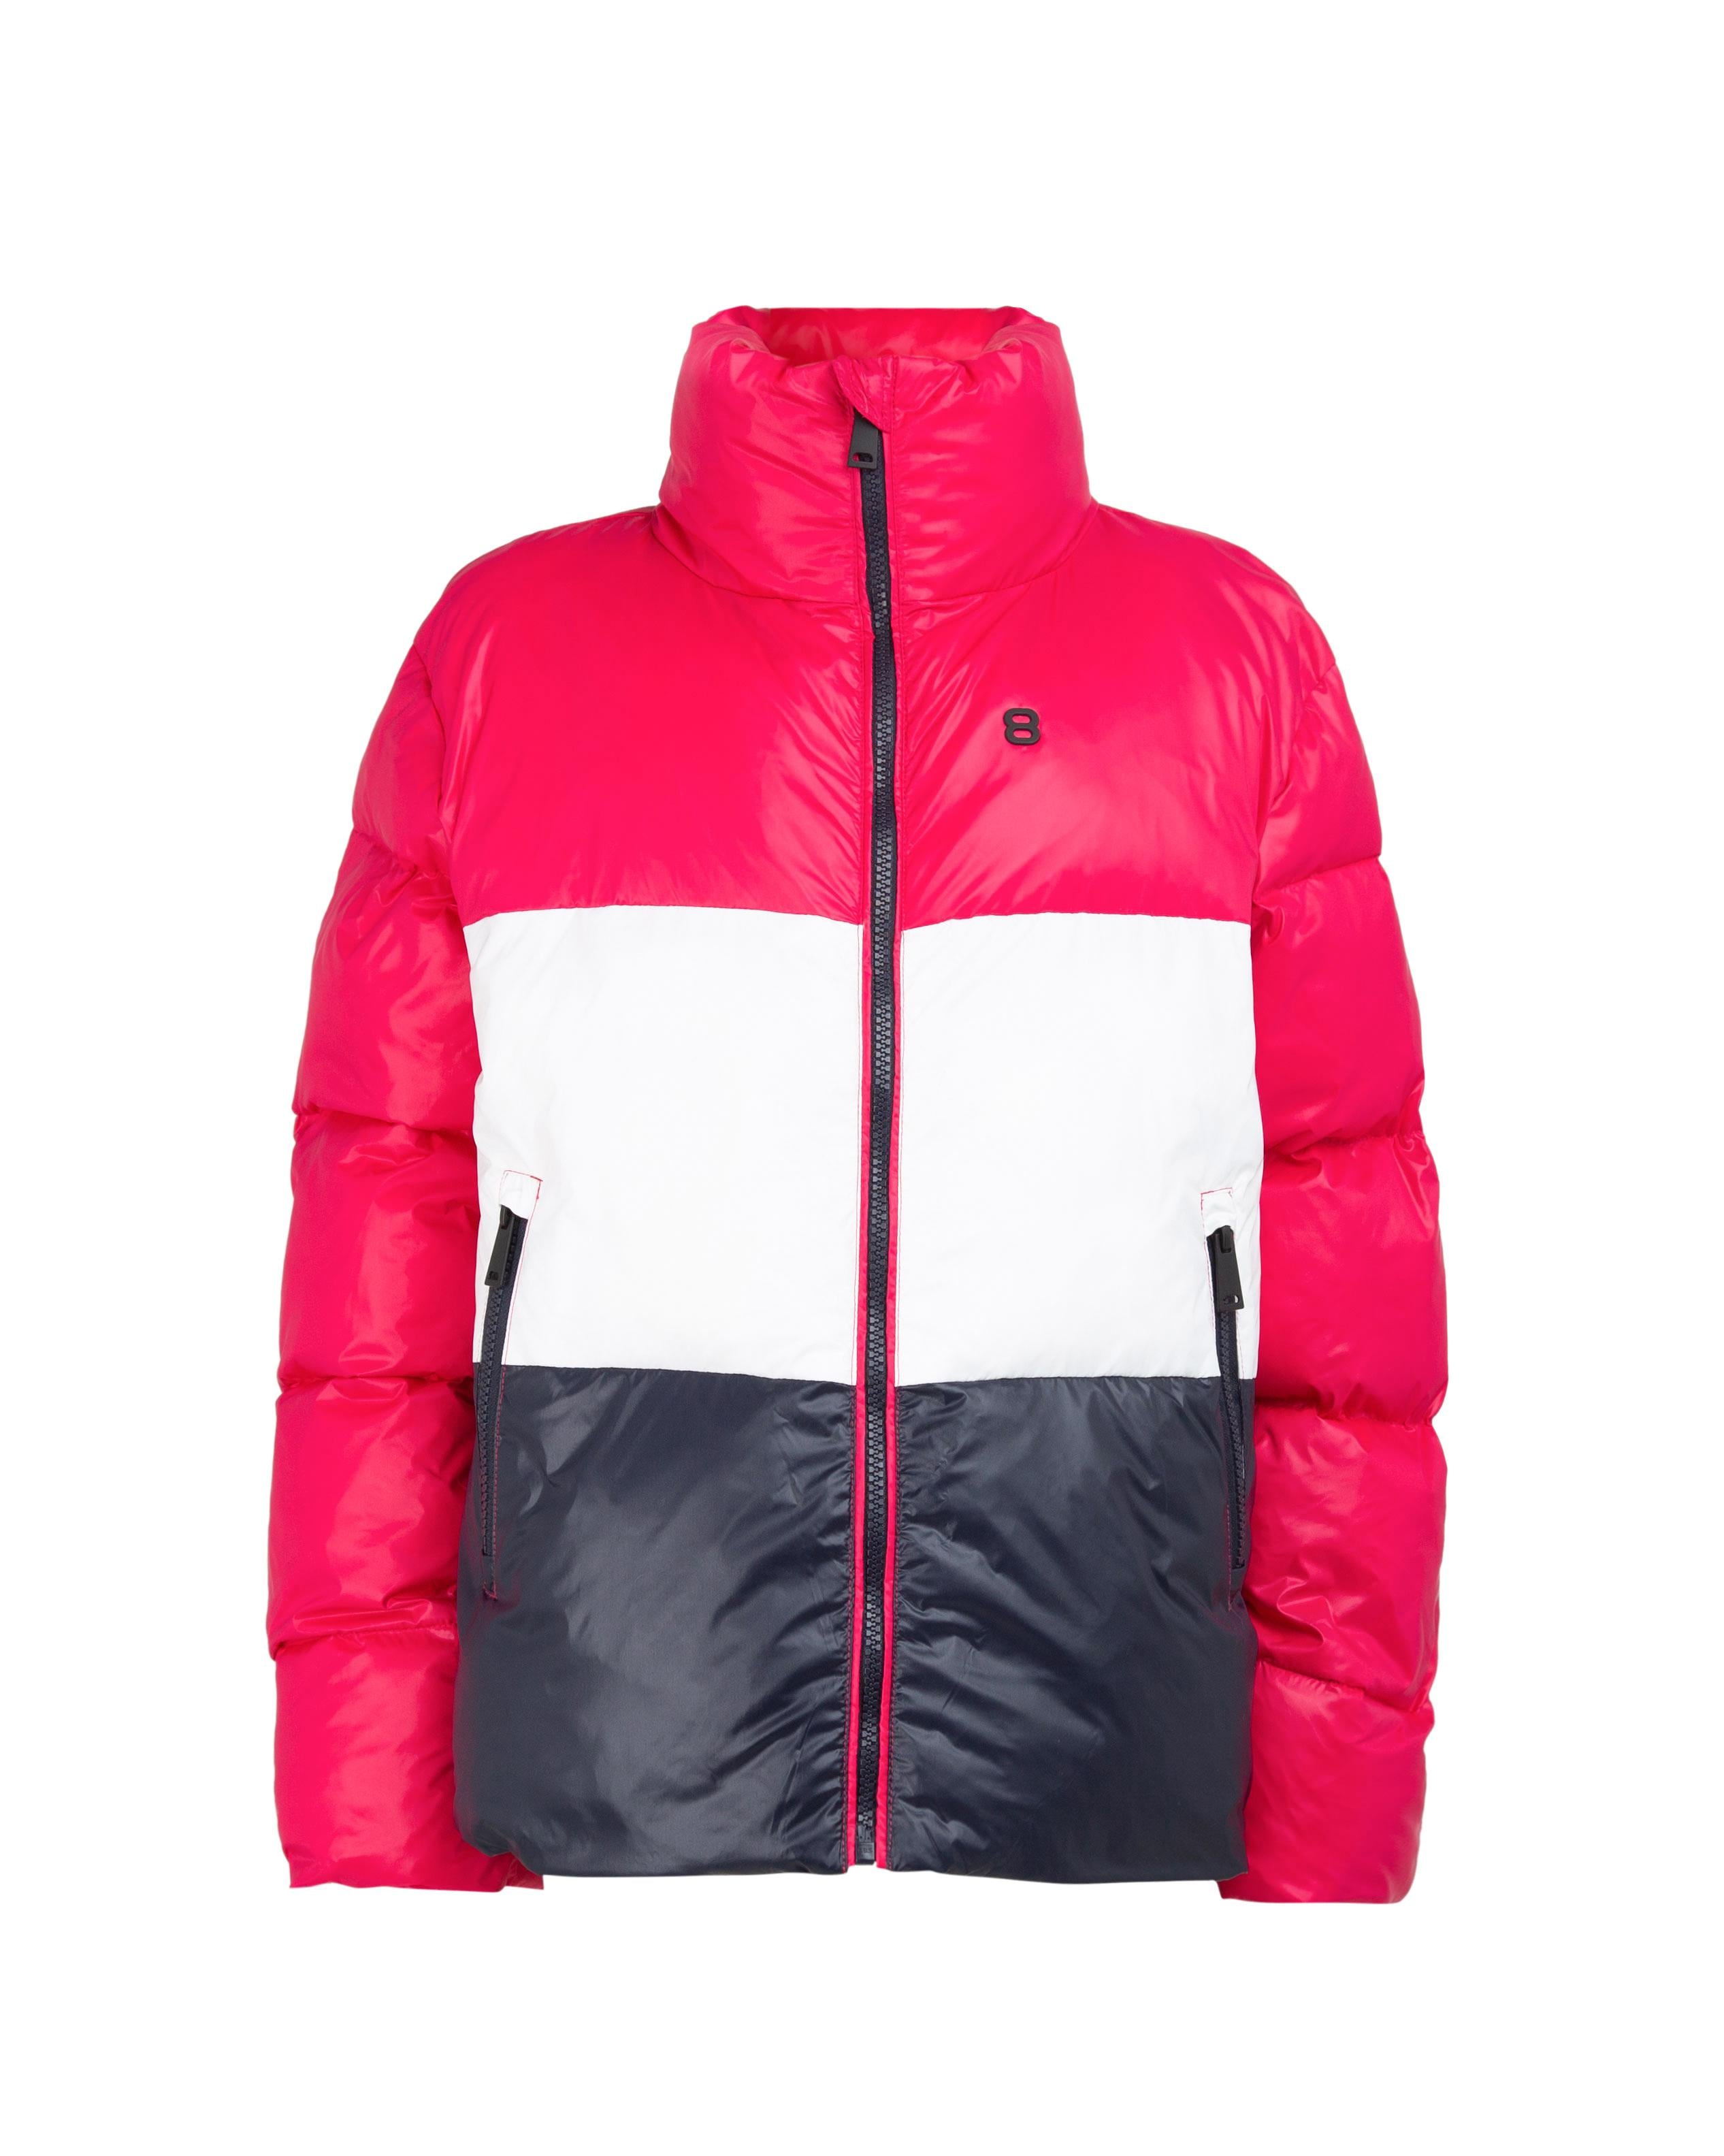 Nora JR Jacket Raspberry - Pink winter jacket kids